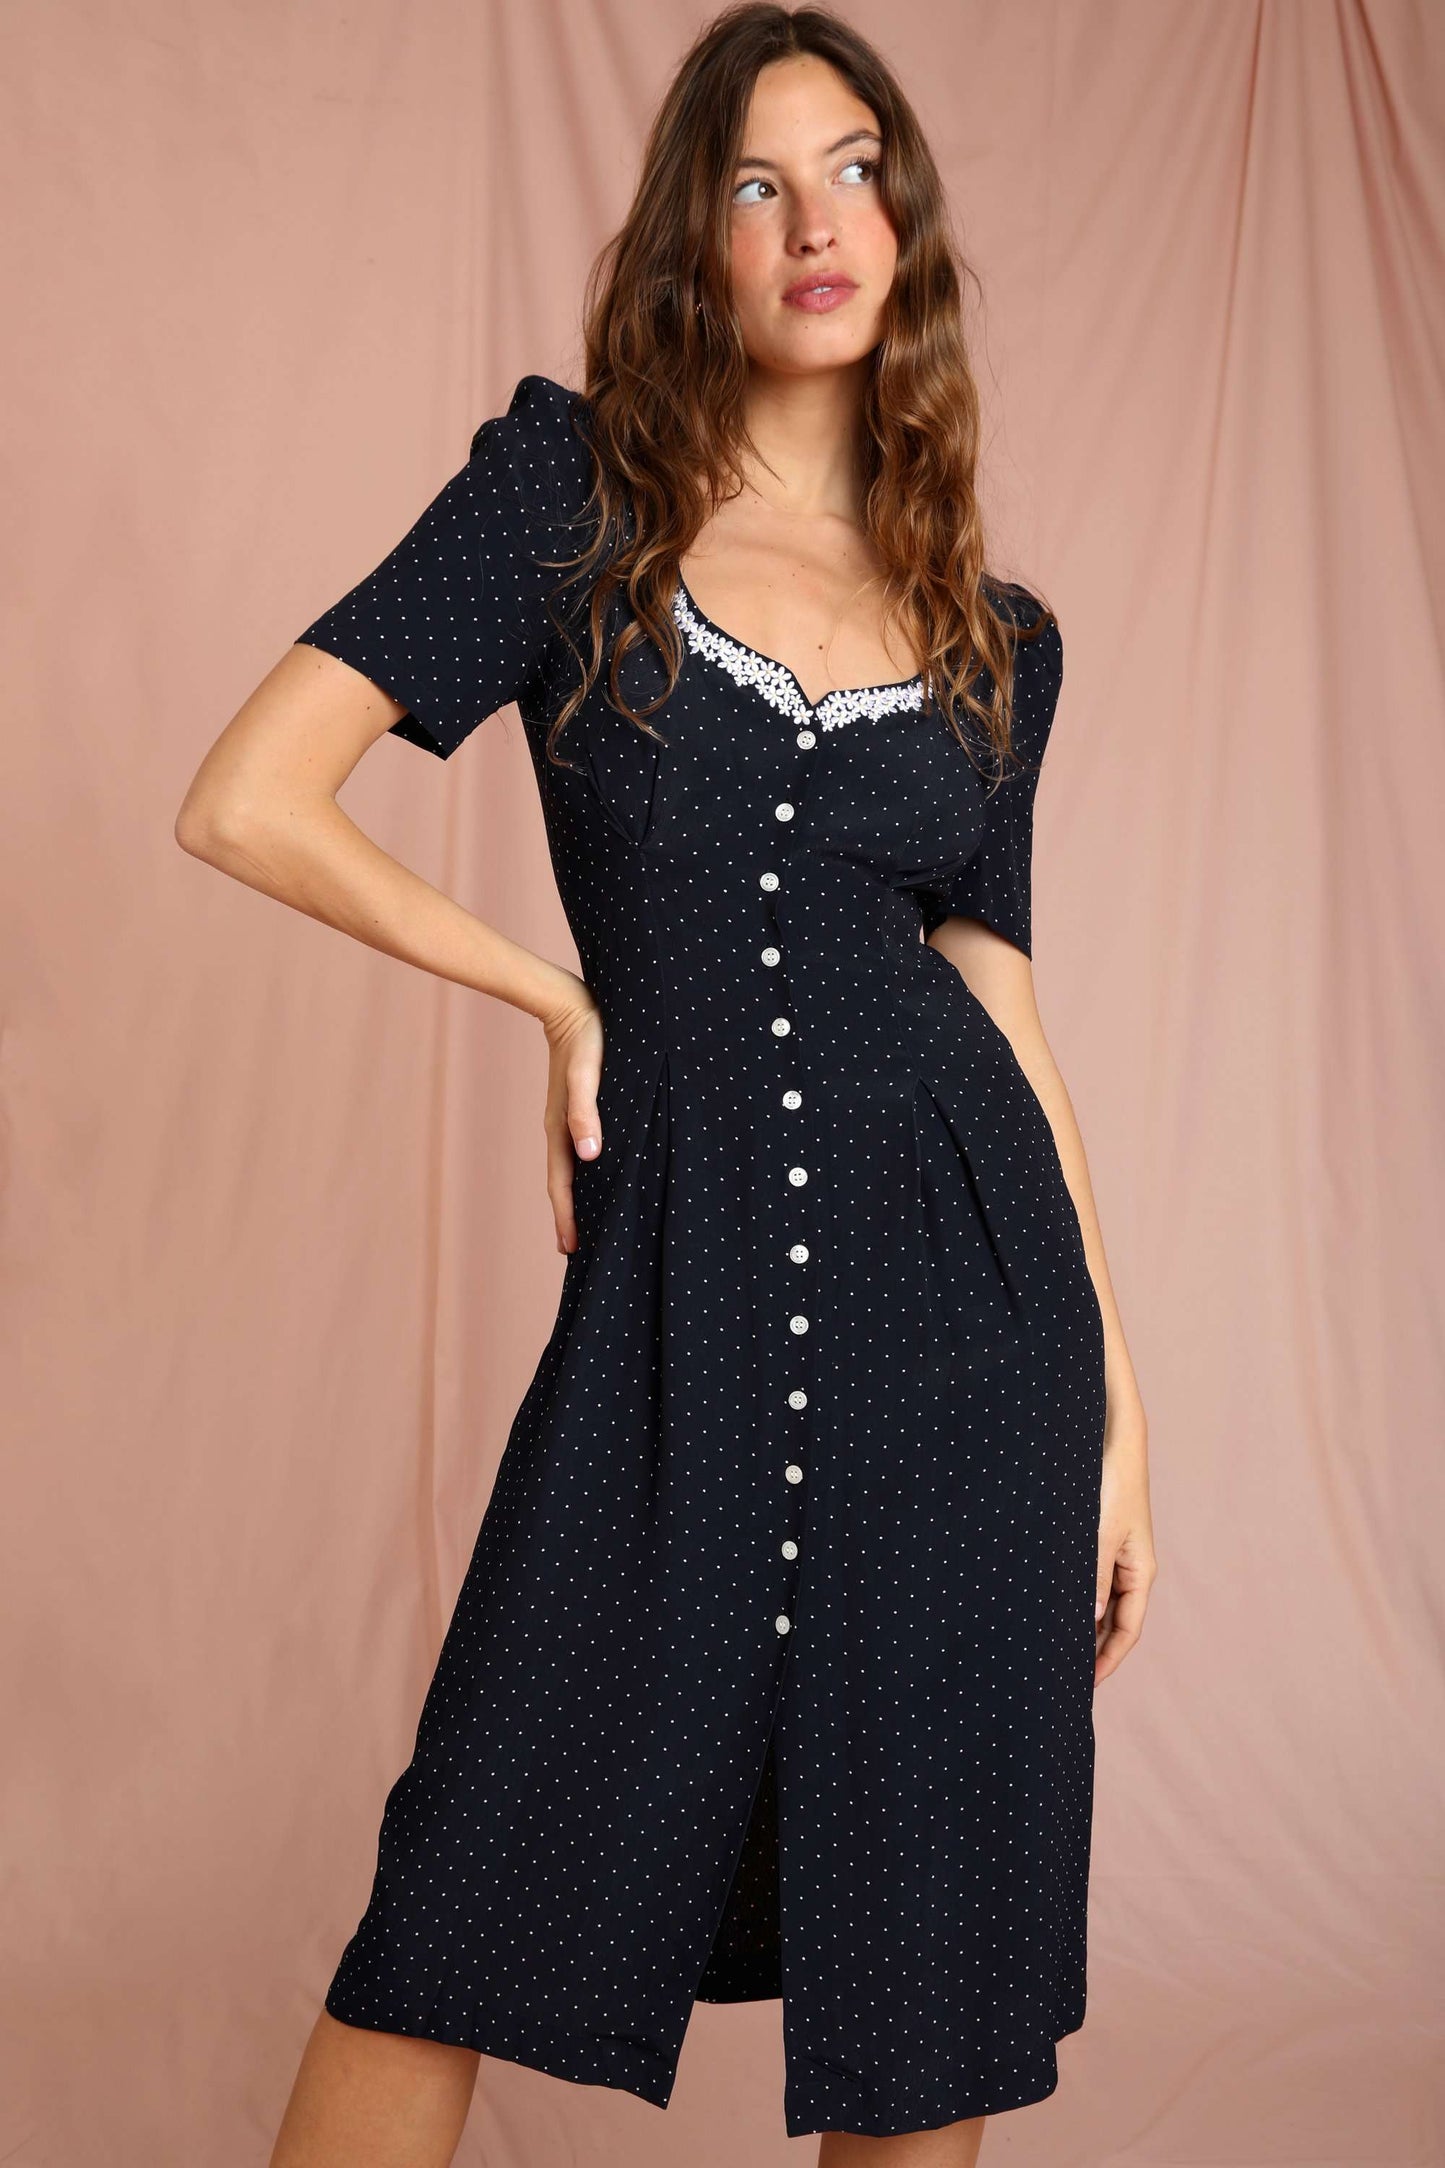 Polka Dot Print Midi Dress Woman Elegant Embroidery Short Sleeve V-neck Vestidos  Summer Femme Vintage Casual Long Robes